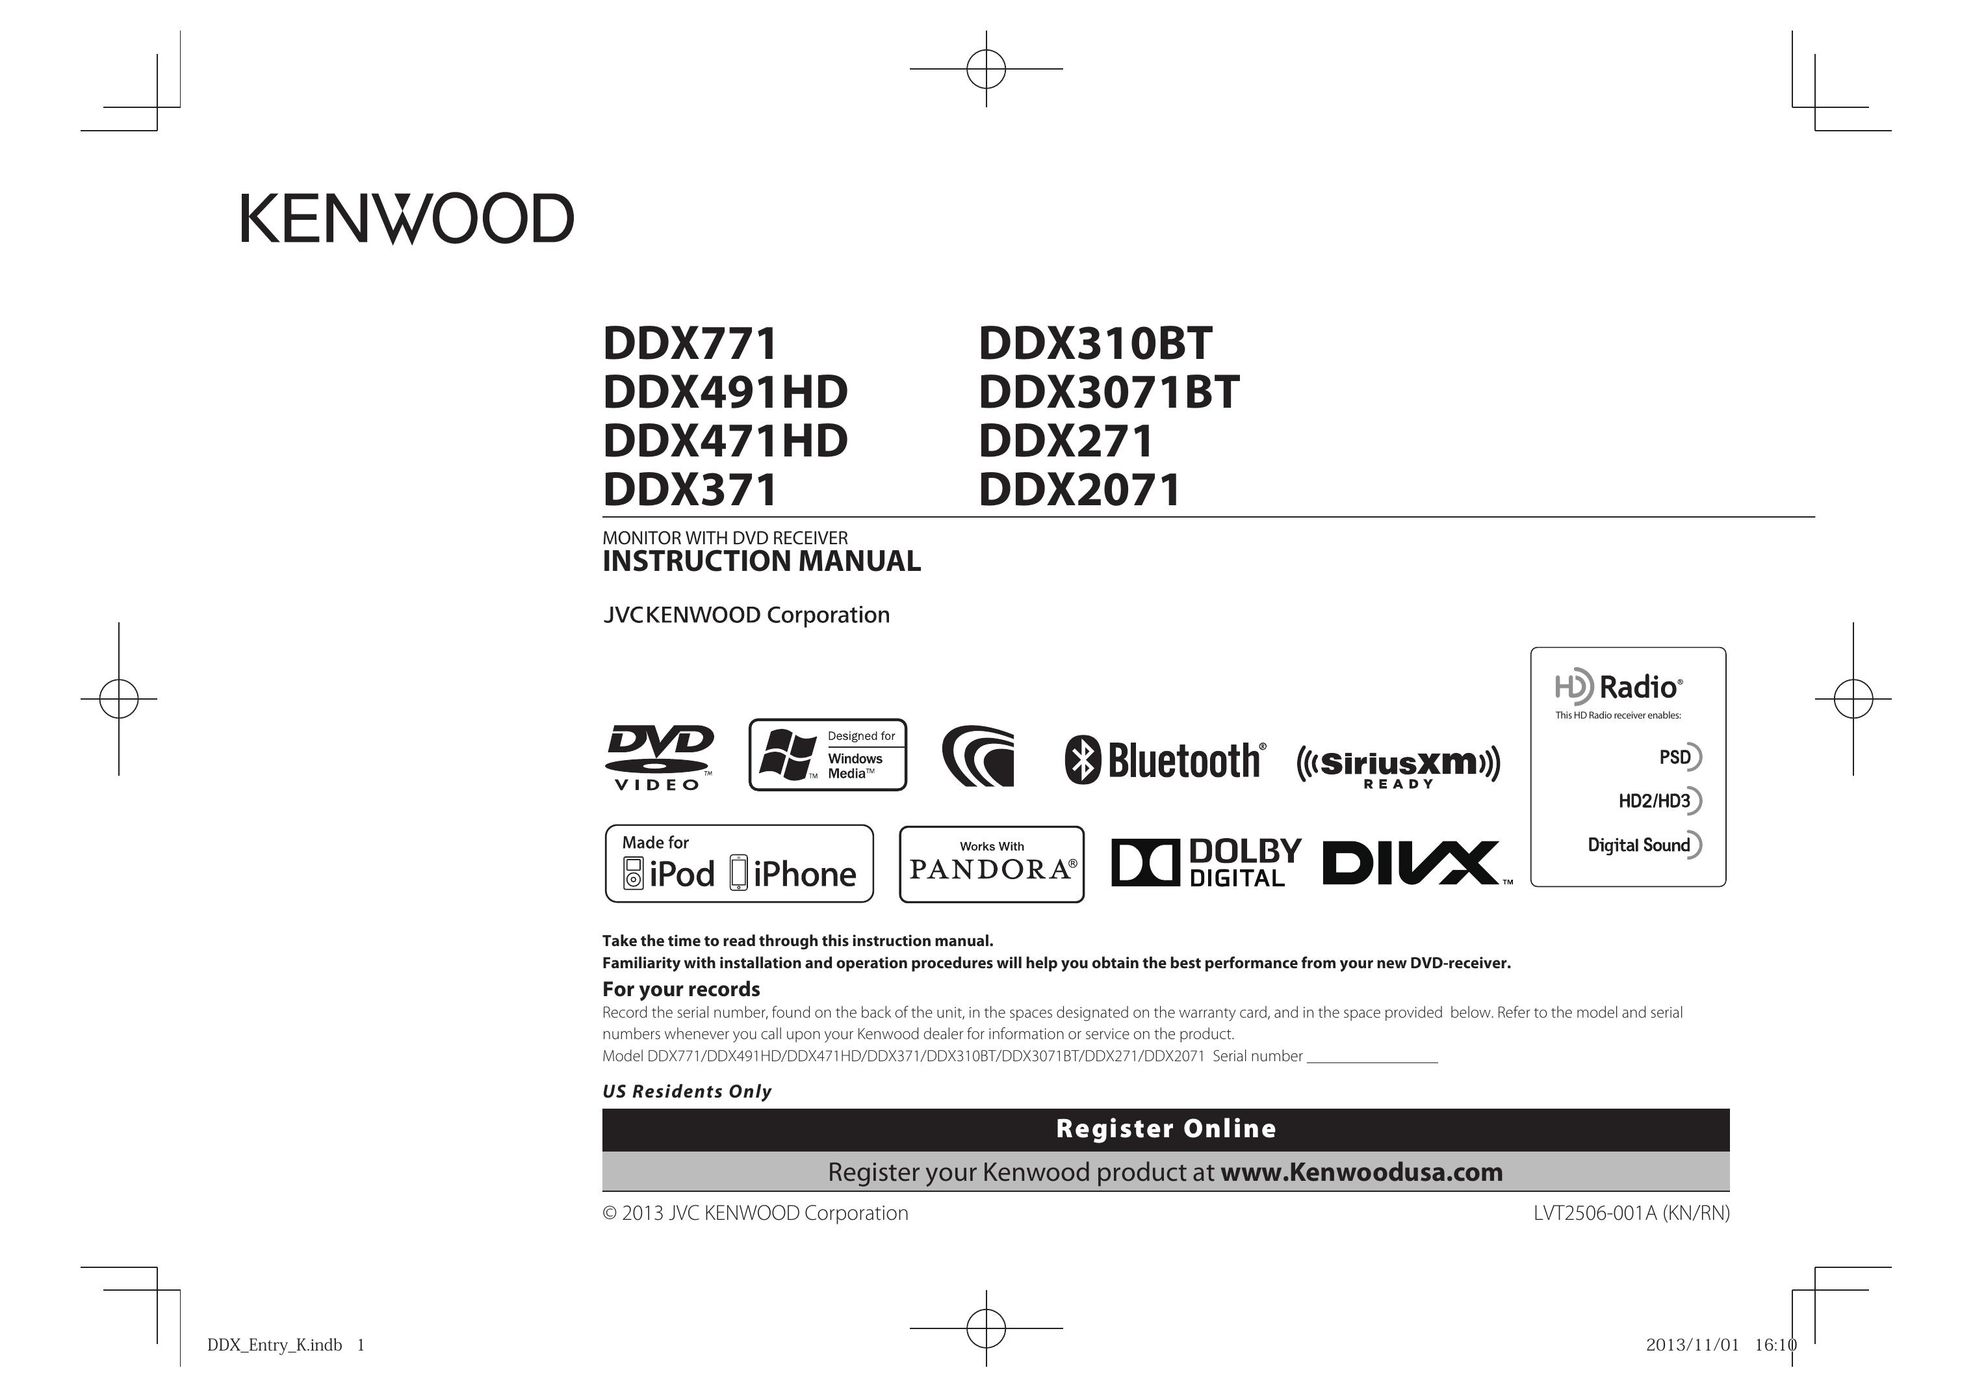 Kenwood DDX271 Car Video System User Manual